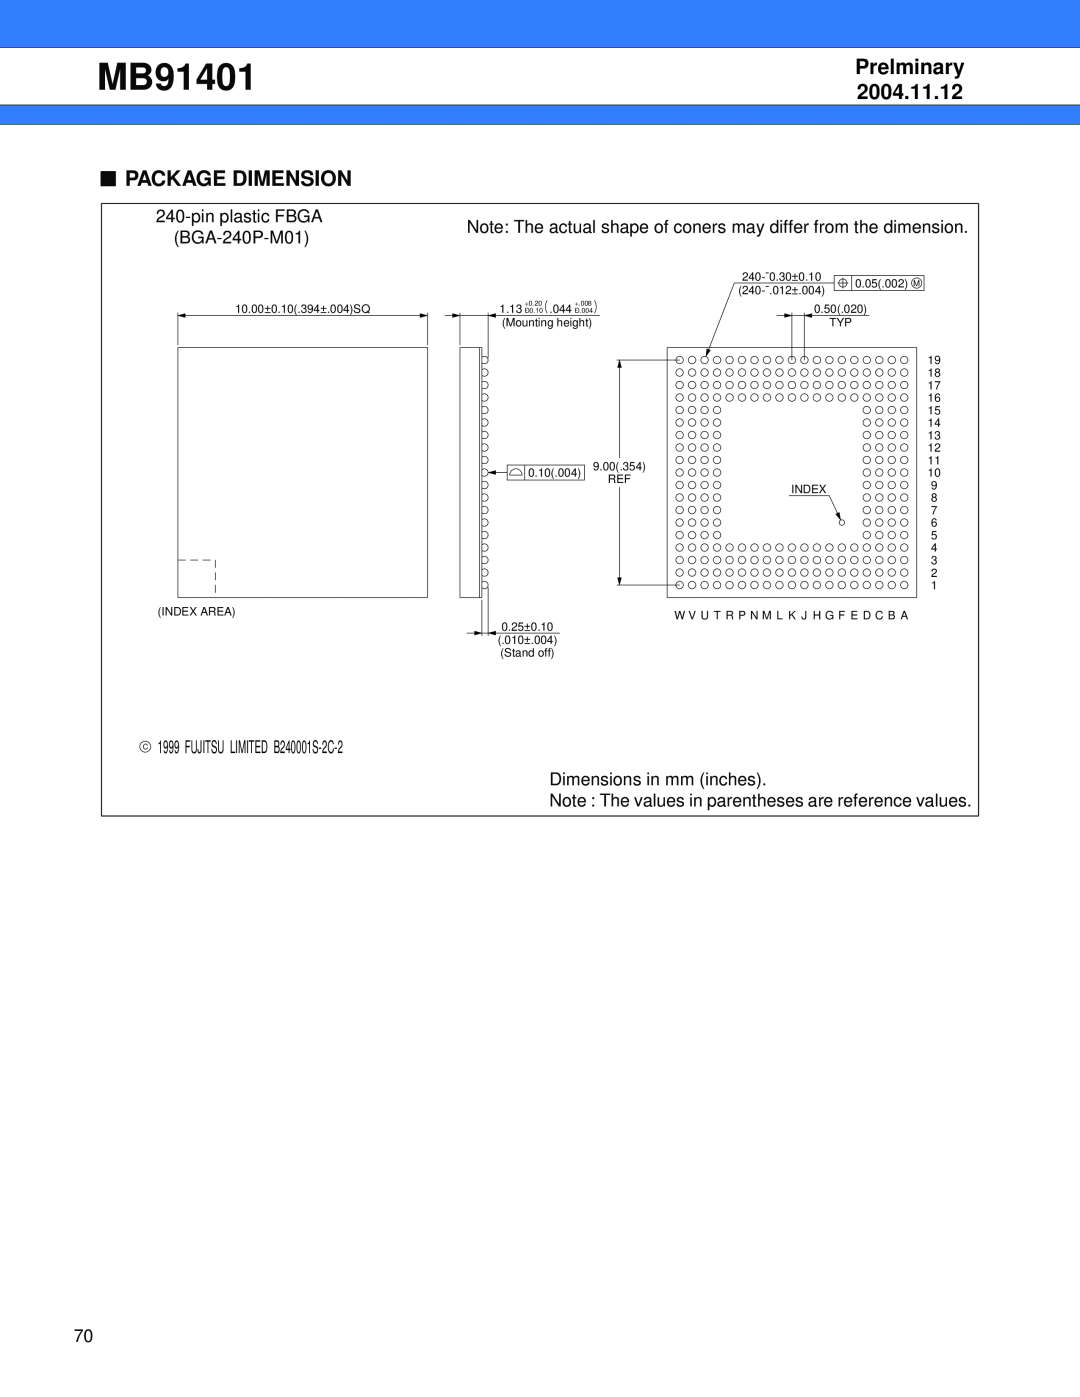 Fujitsu MB91401 manual Package Dimension, Prelminary, 2004.11.12 